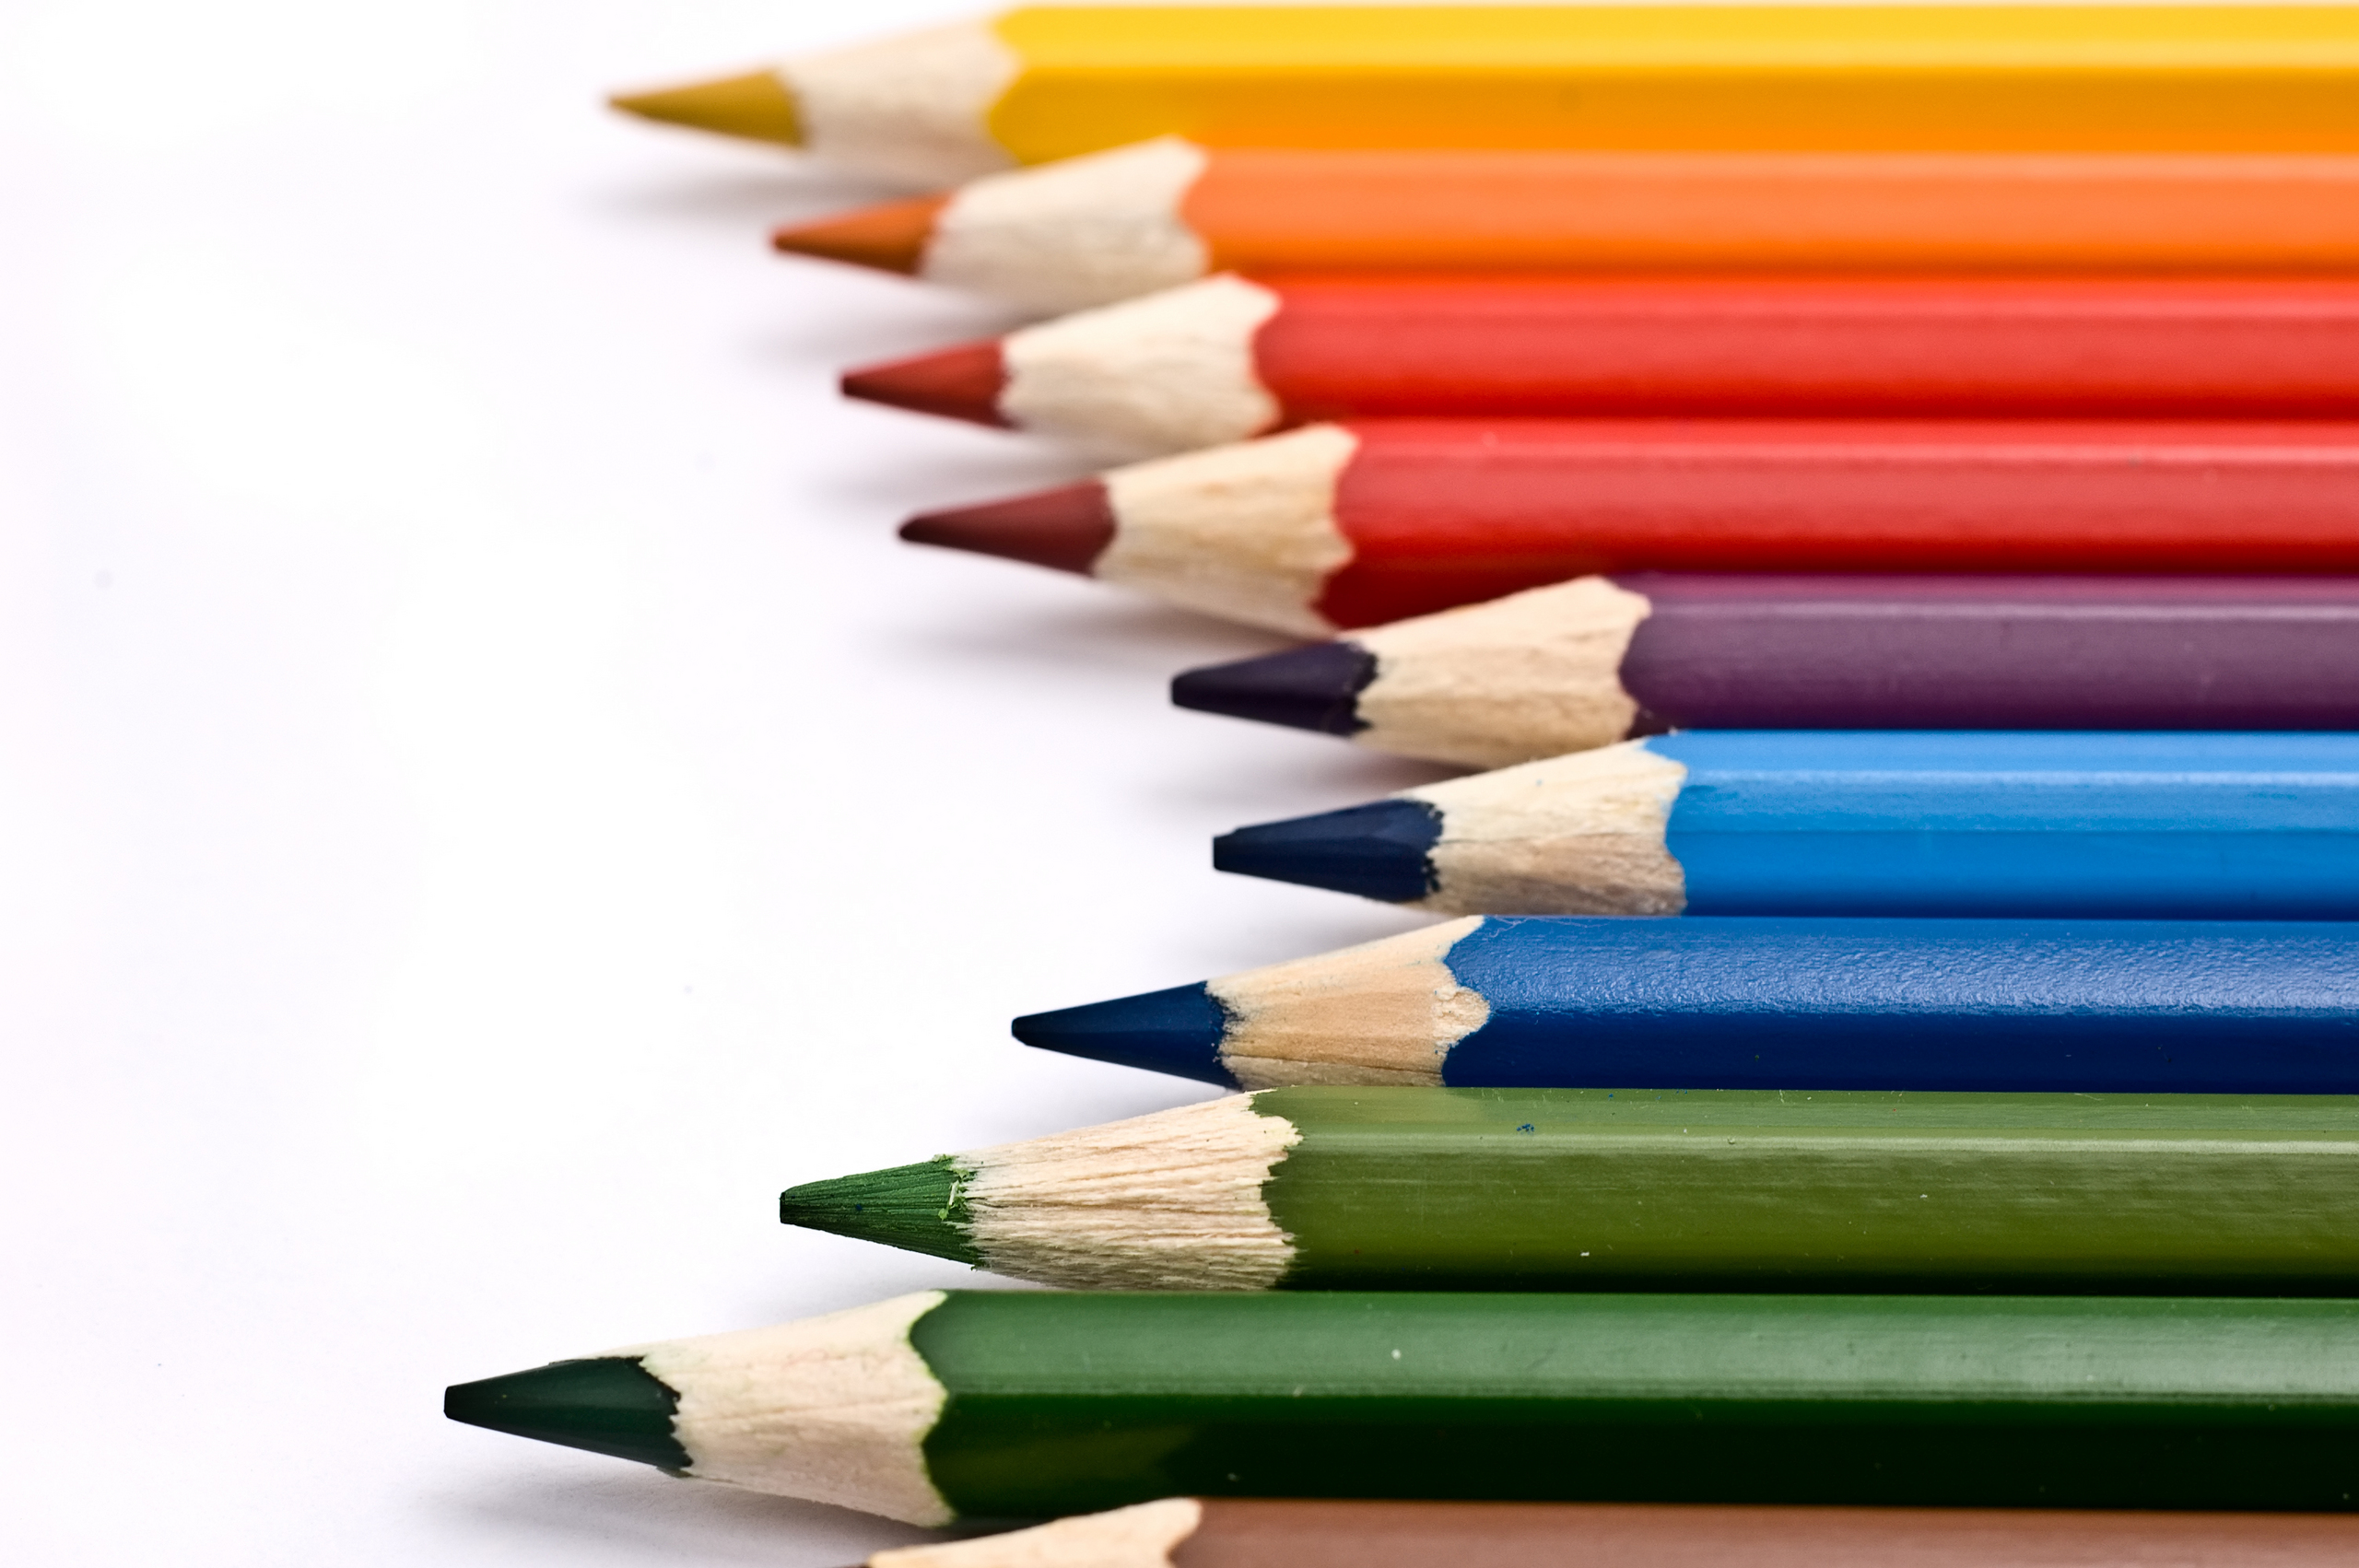 Colored pencils - Pencils Photo (22186535) - Fanpop